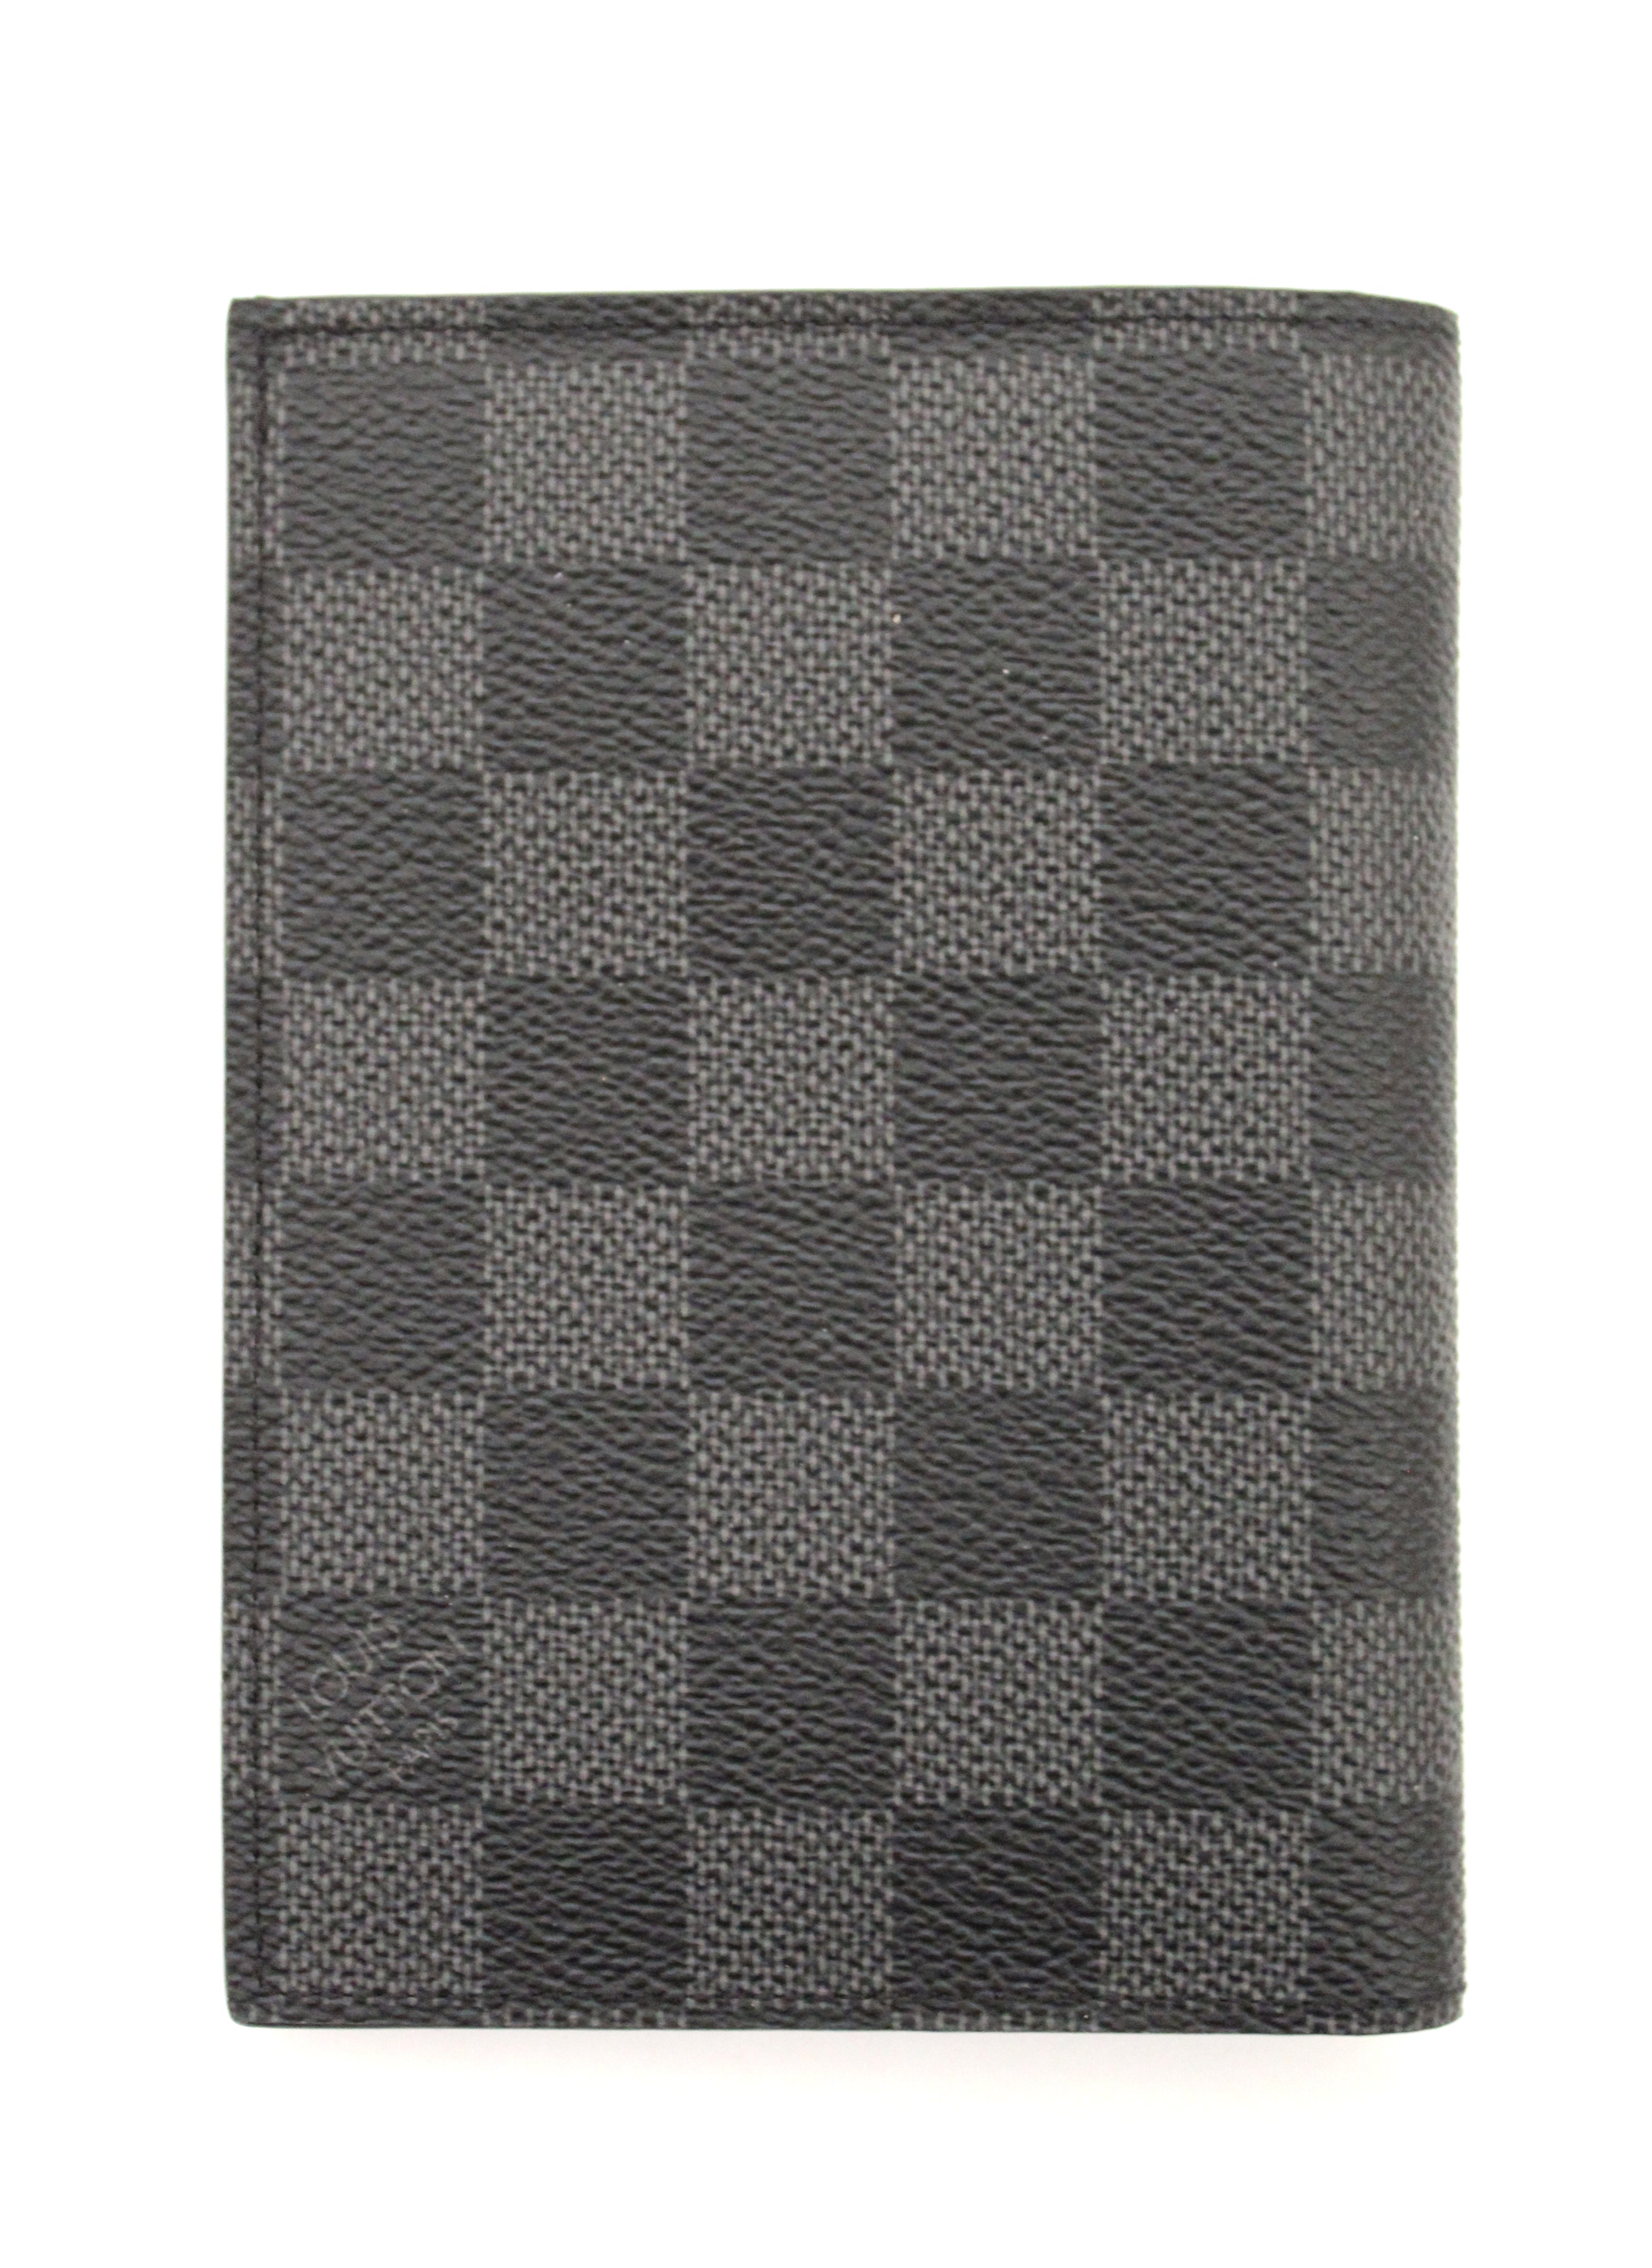 Louis Vuitton Passport Cover Damier Graphite Black/Gray